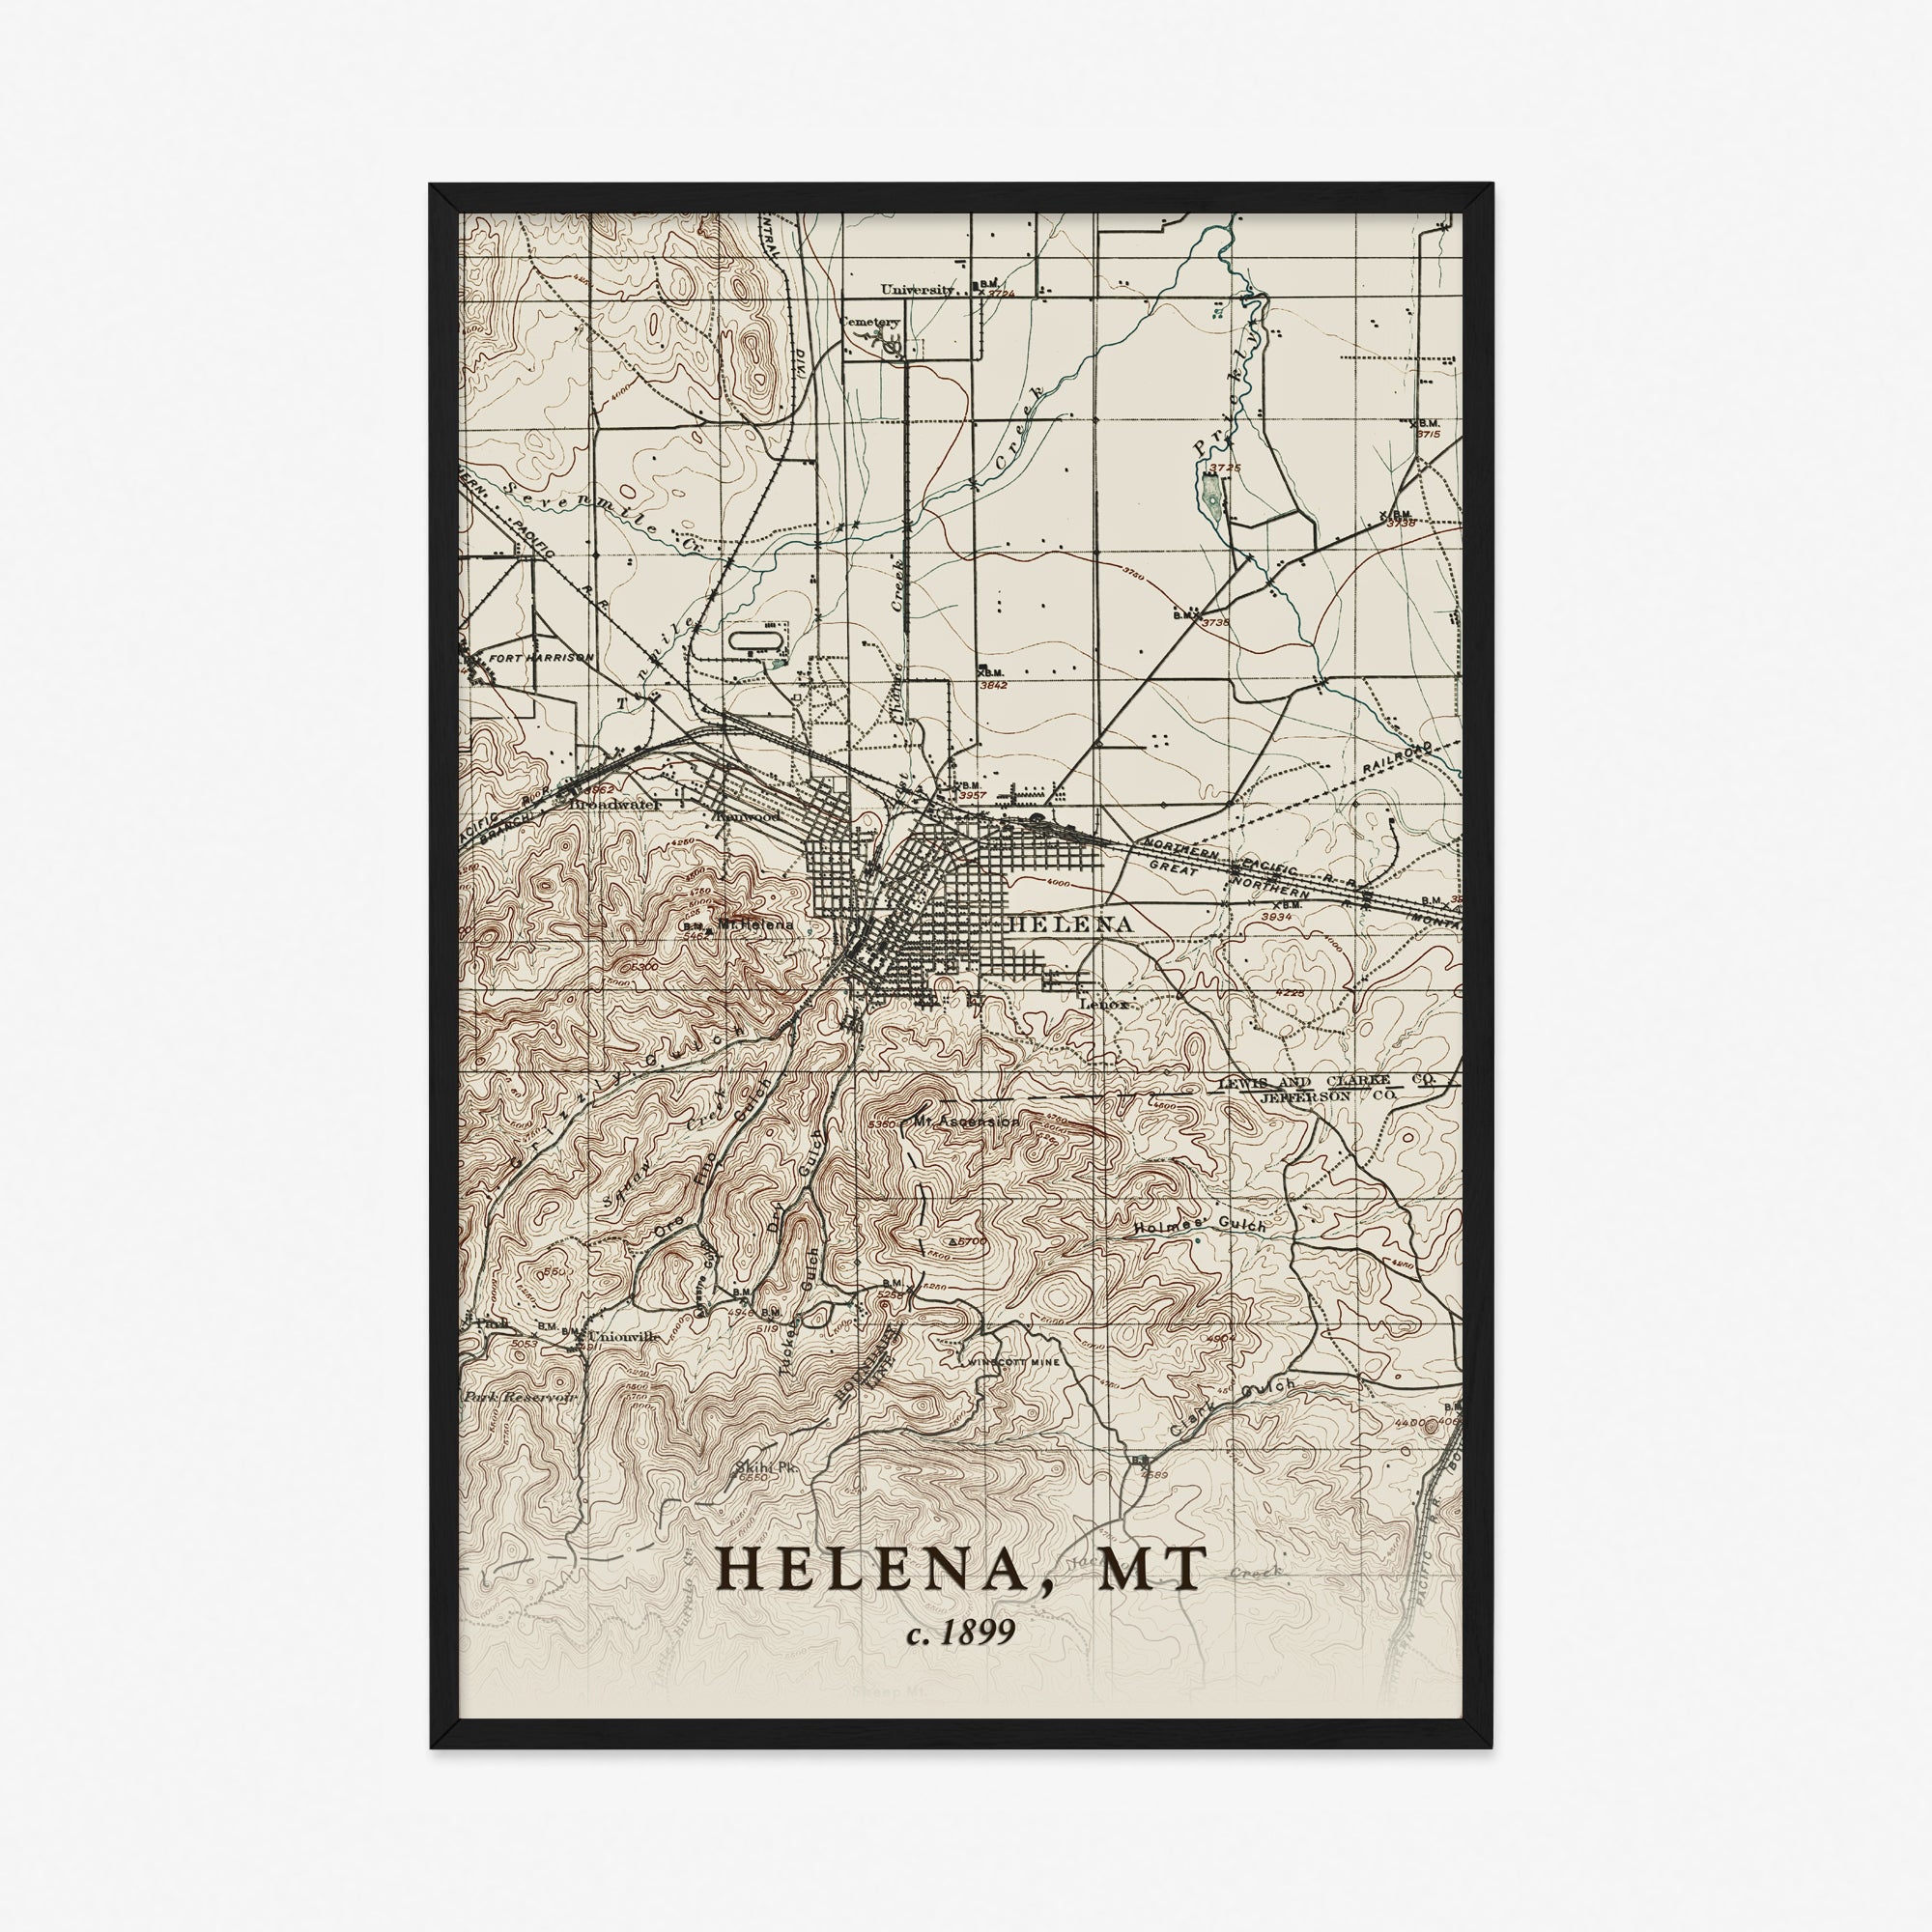 Helena, MT - 1899 Topographic Map